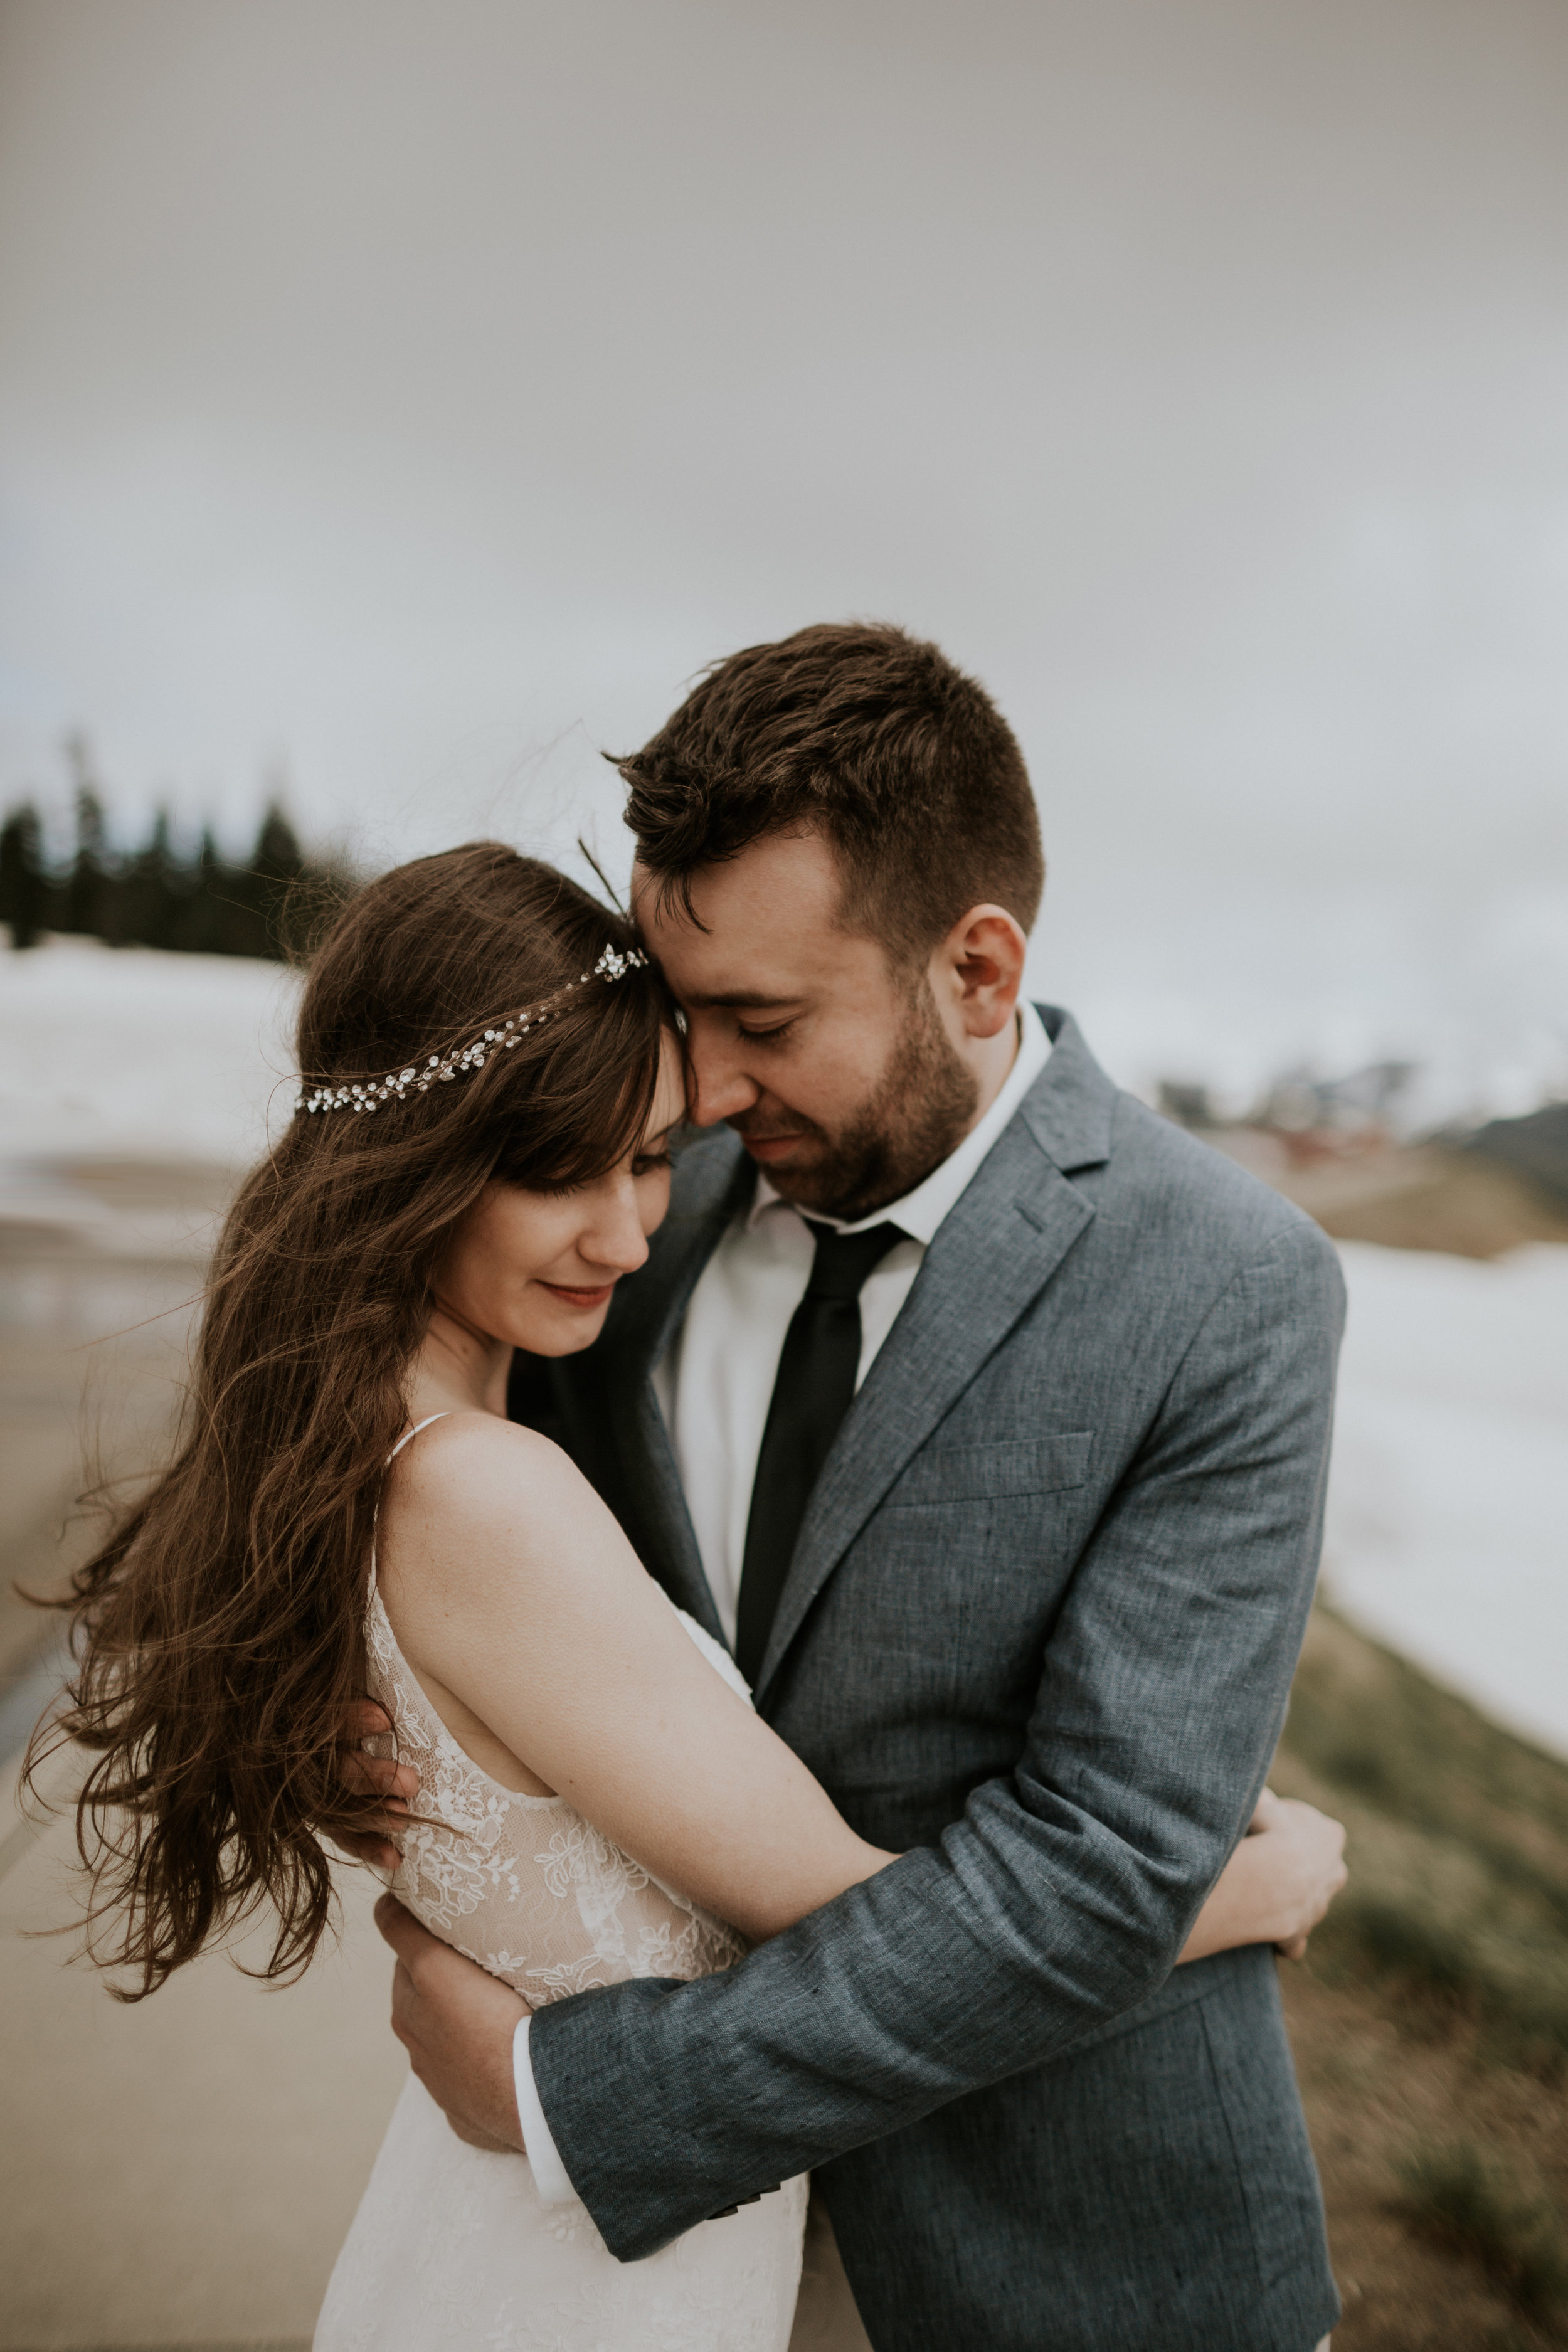 PNW-elopement-wedding-engagement-olympic national park-port angeles-hurricane ridge-lake crescent-kayla dawn photography- photographer-photography-kayladawnphoto-181.jpg